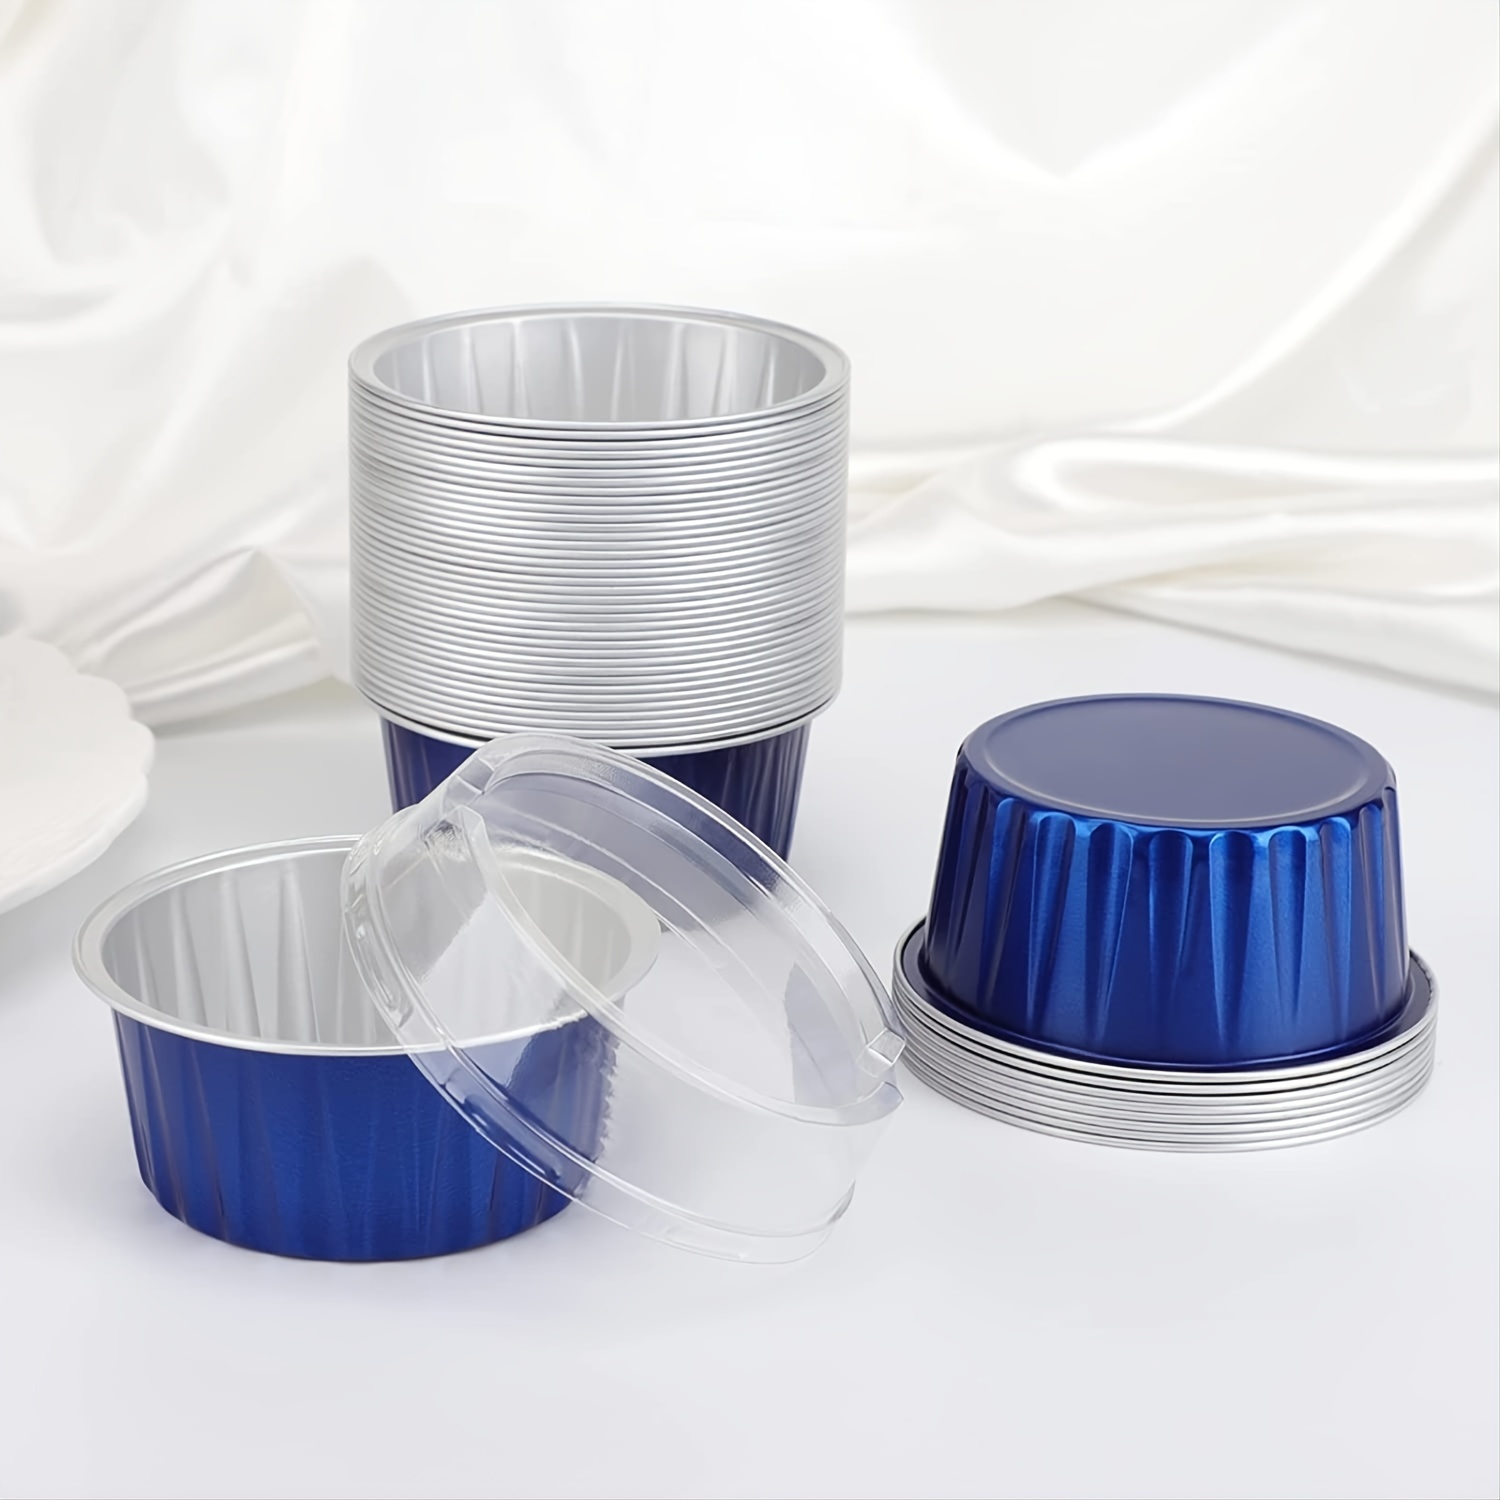 DEAYOU 100 Pieces Aluminum Foil Baking Cups with Lids, 5oz Disposable  Ramekins Muffin Cups, 3 Cupcake Foil Liners Tart Pie Tin Pan Holder for